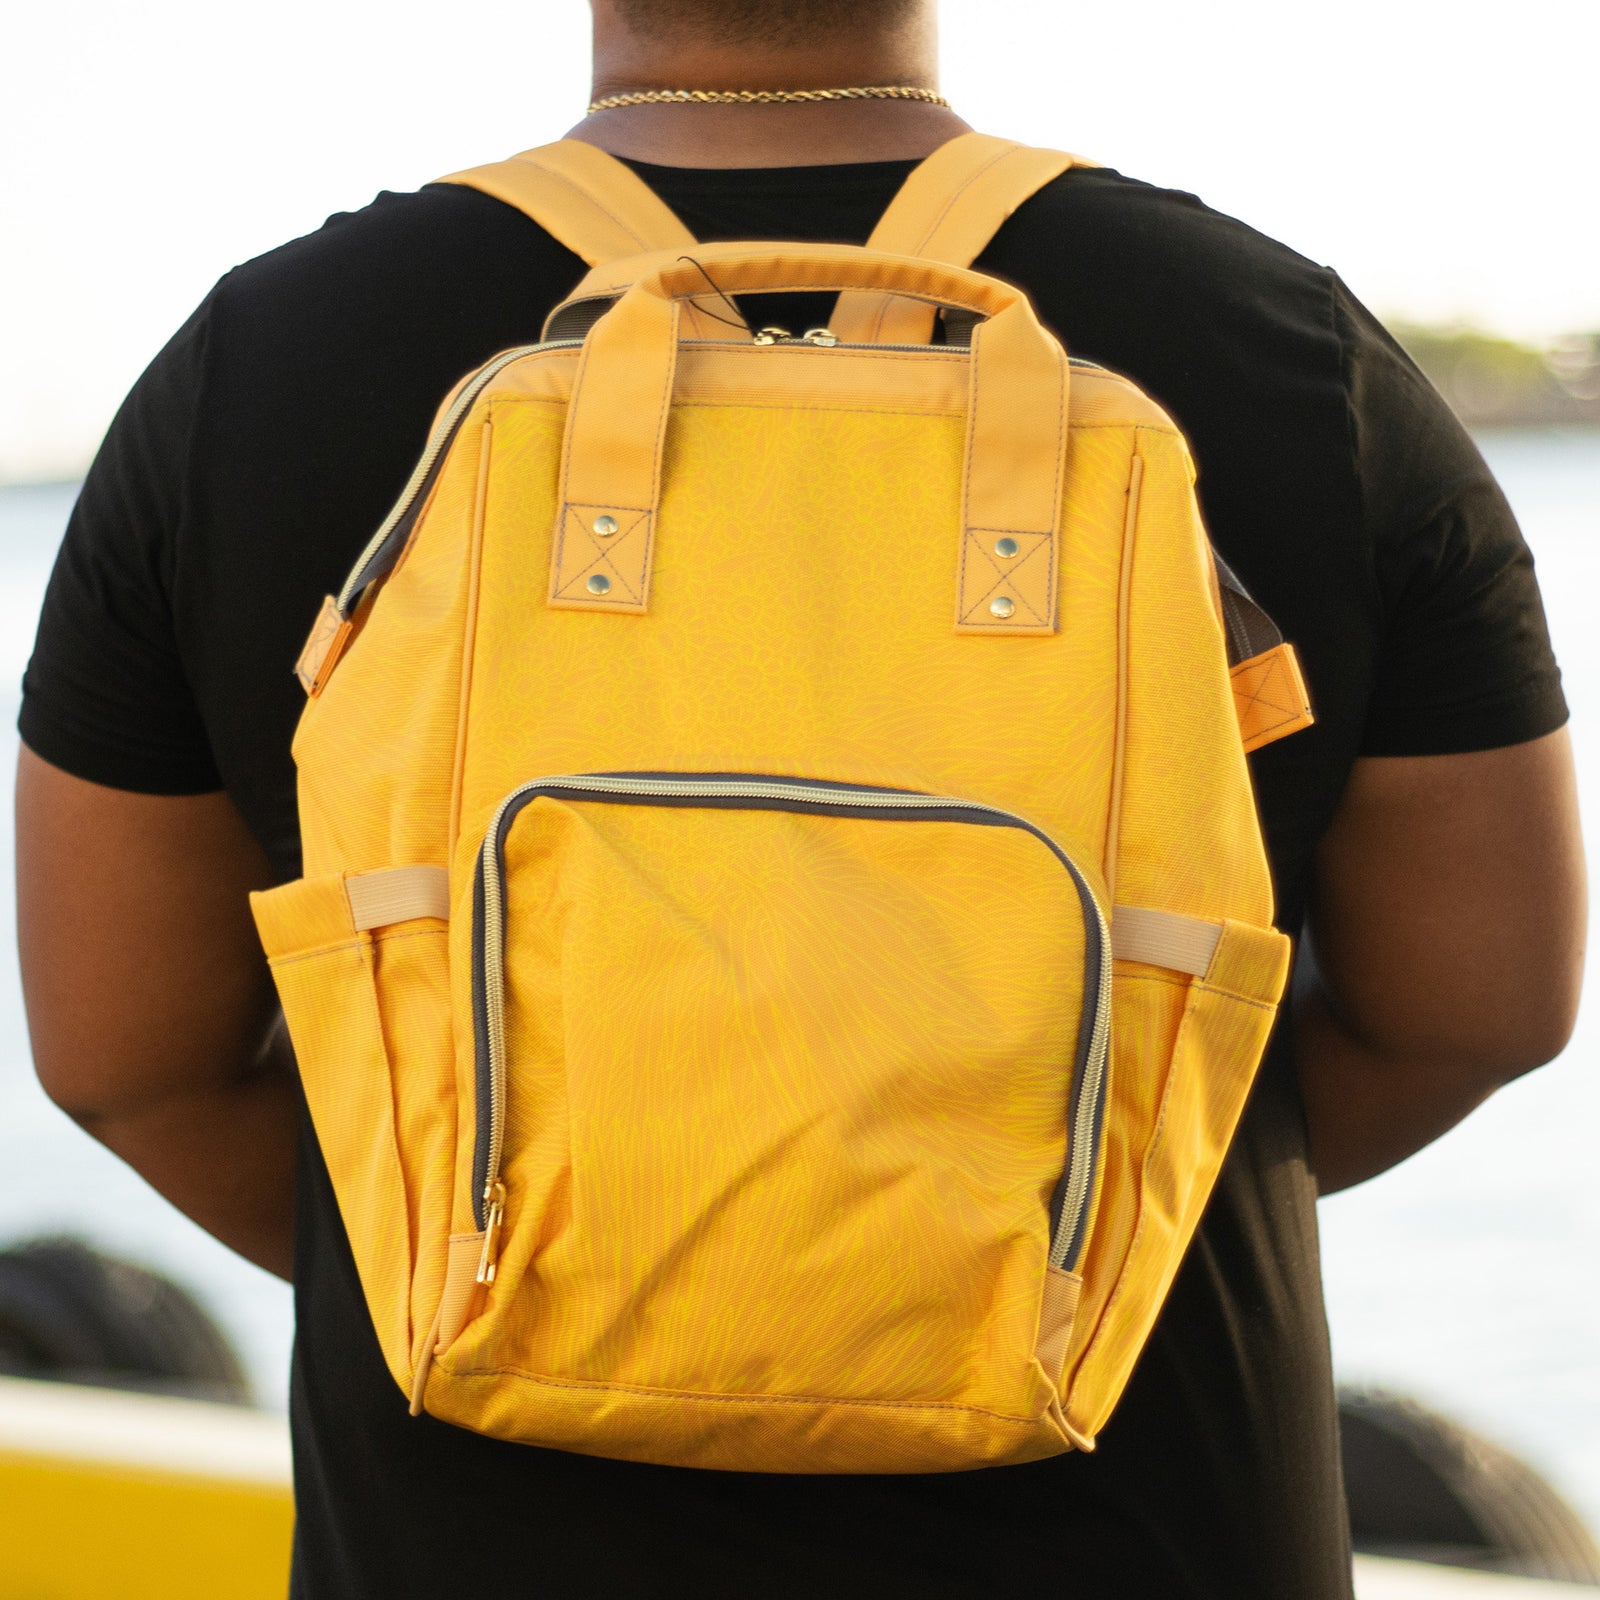 Pop-Up Mākeke - Kini Zamora - Silversword Waterproof Backpack - Yellow - Front View